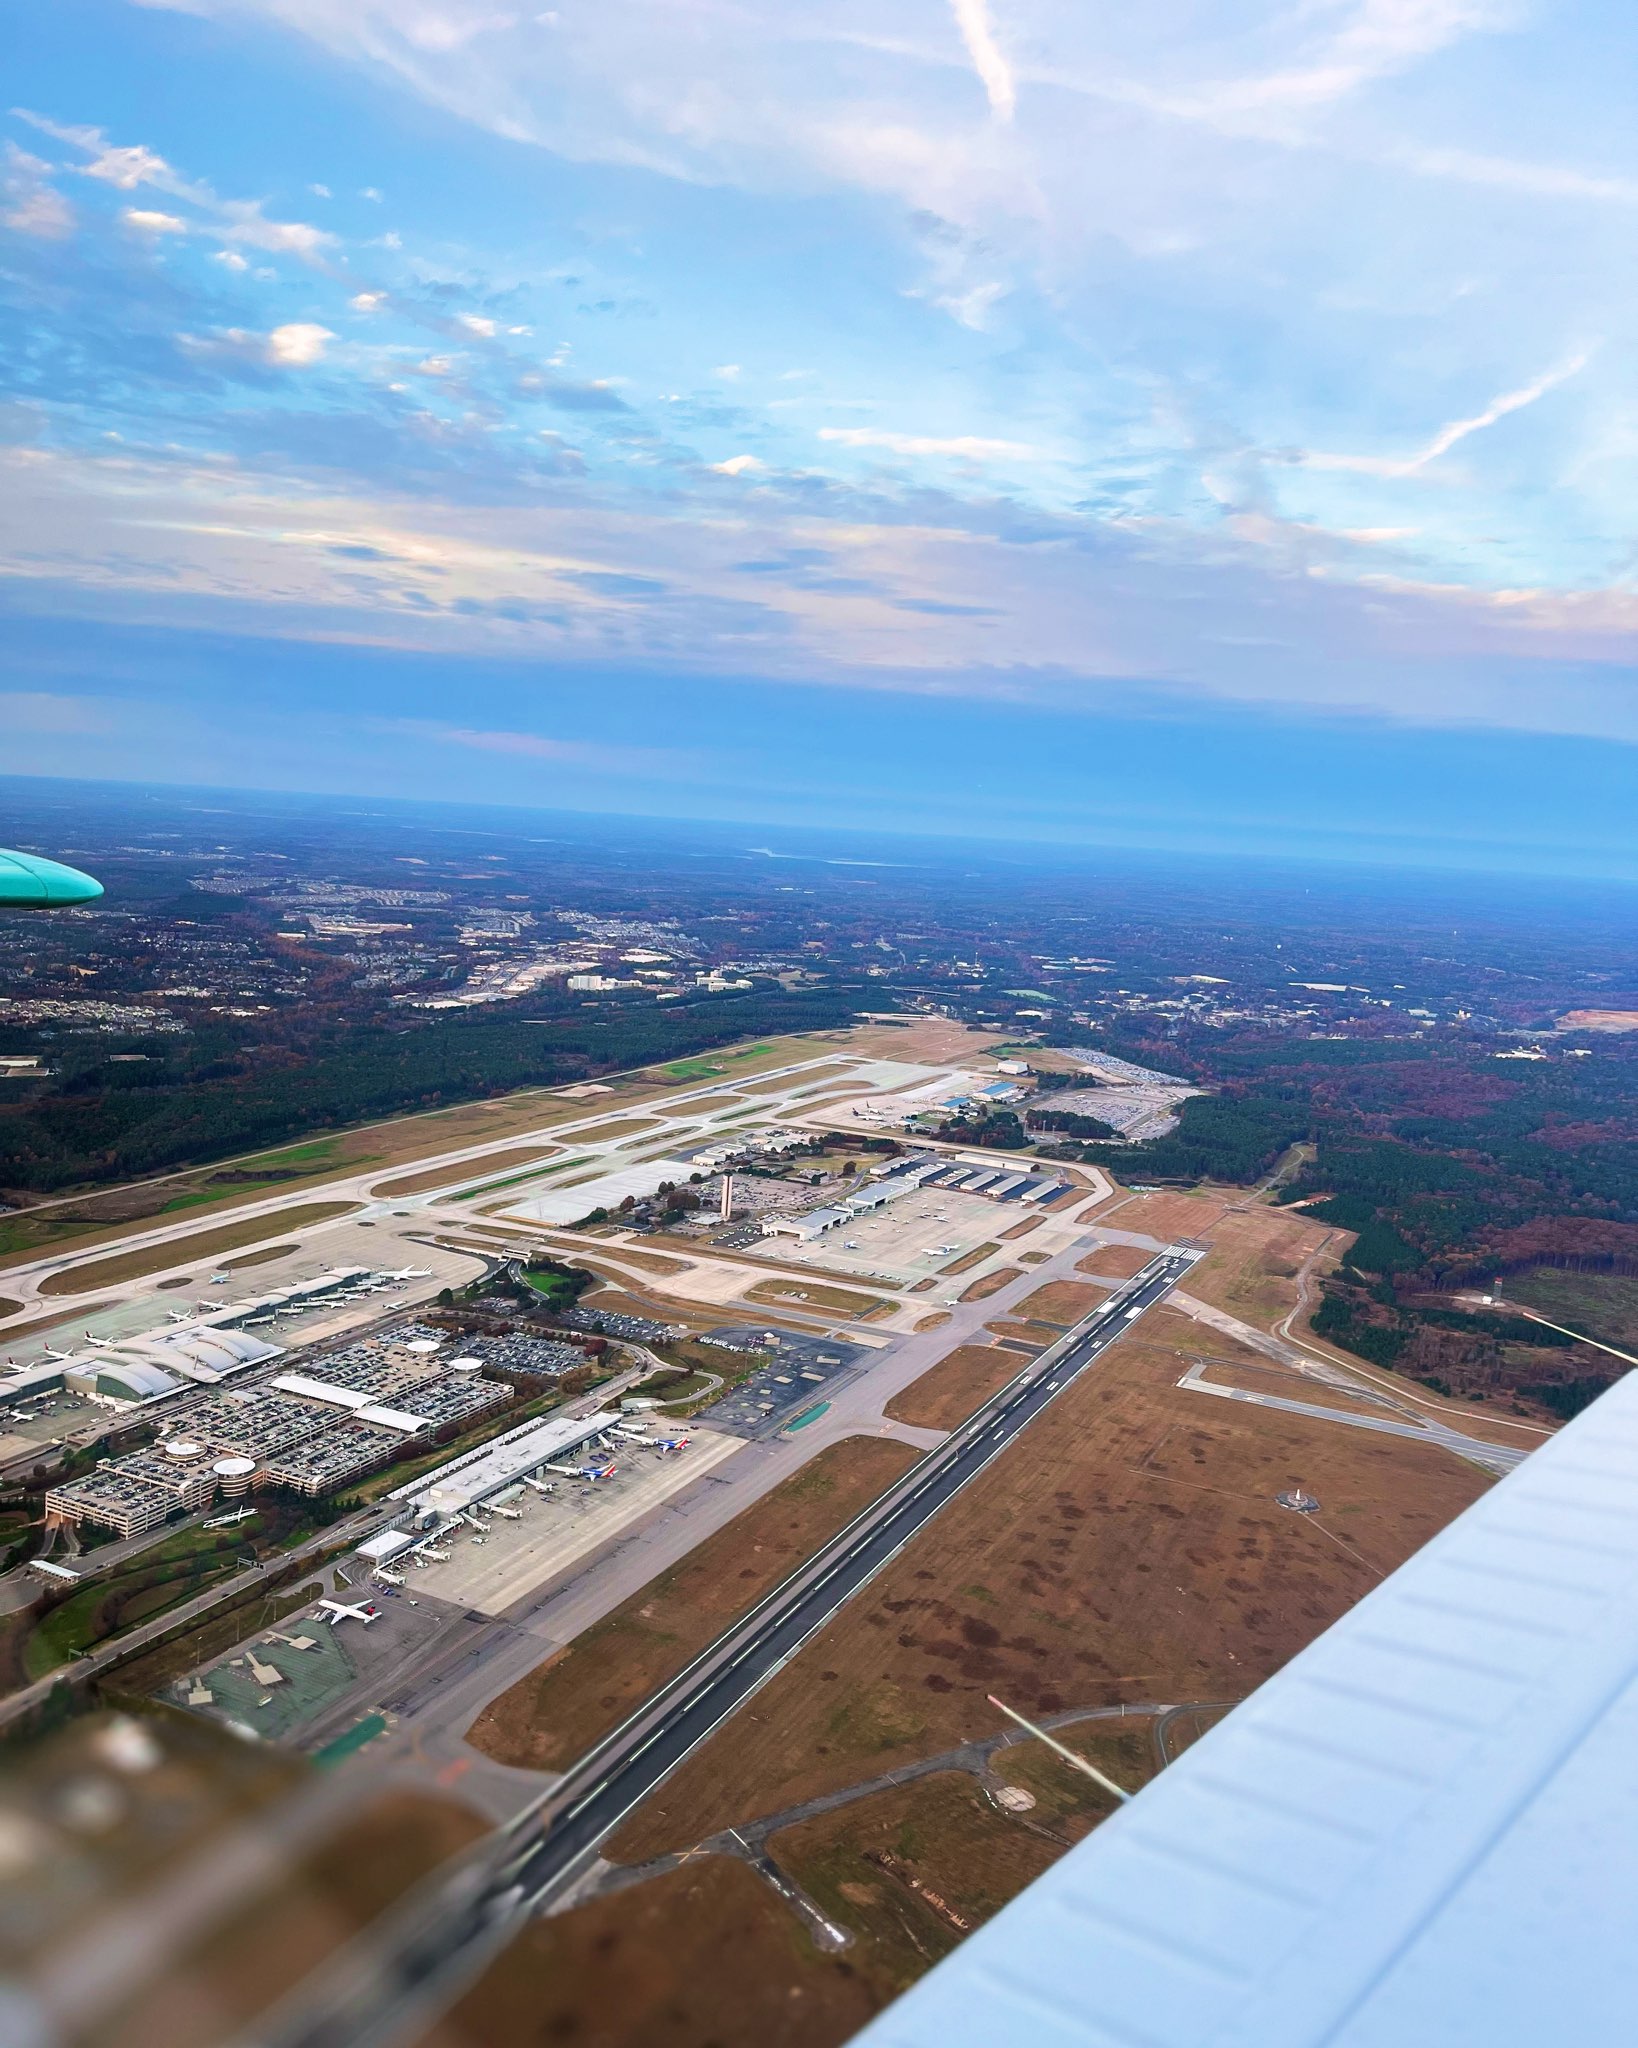 Raleigh Durham International Airport - home of FlightGest Academy